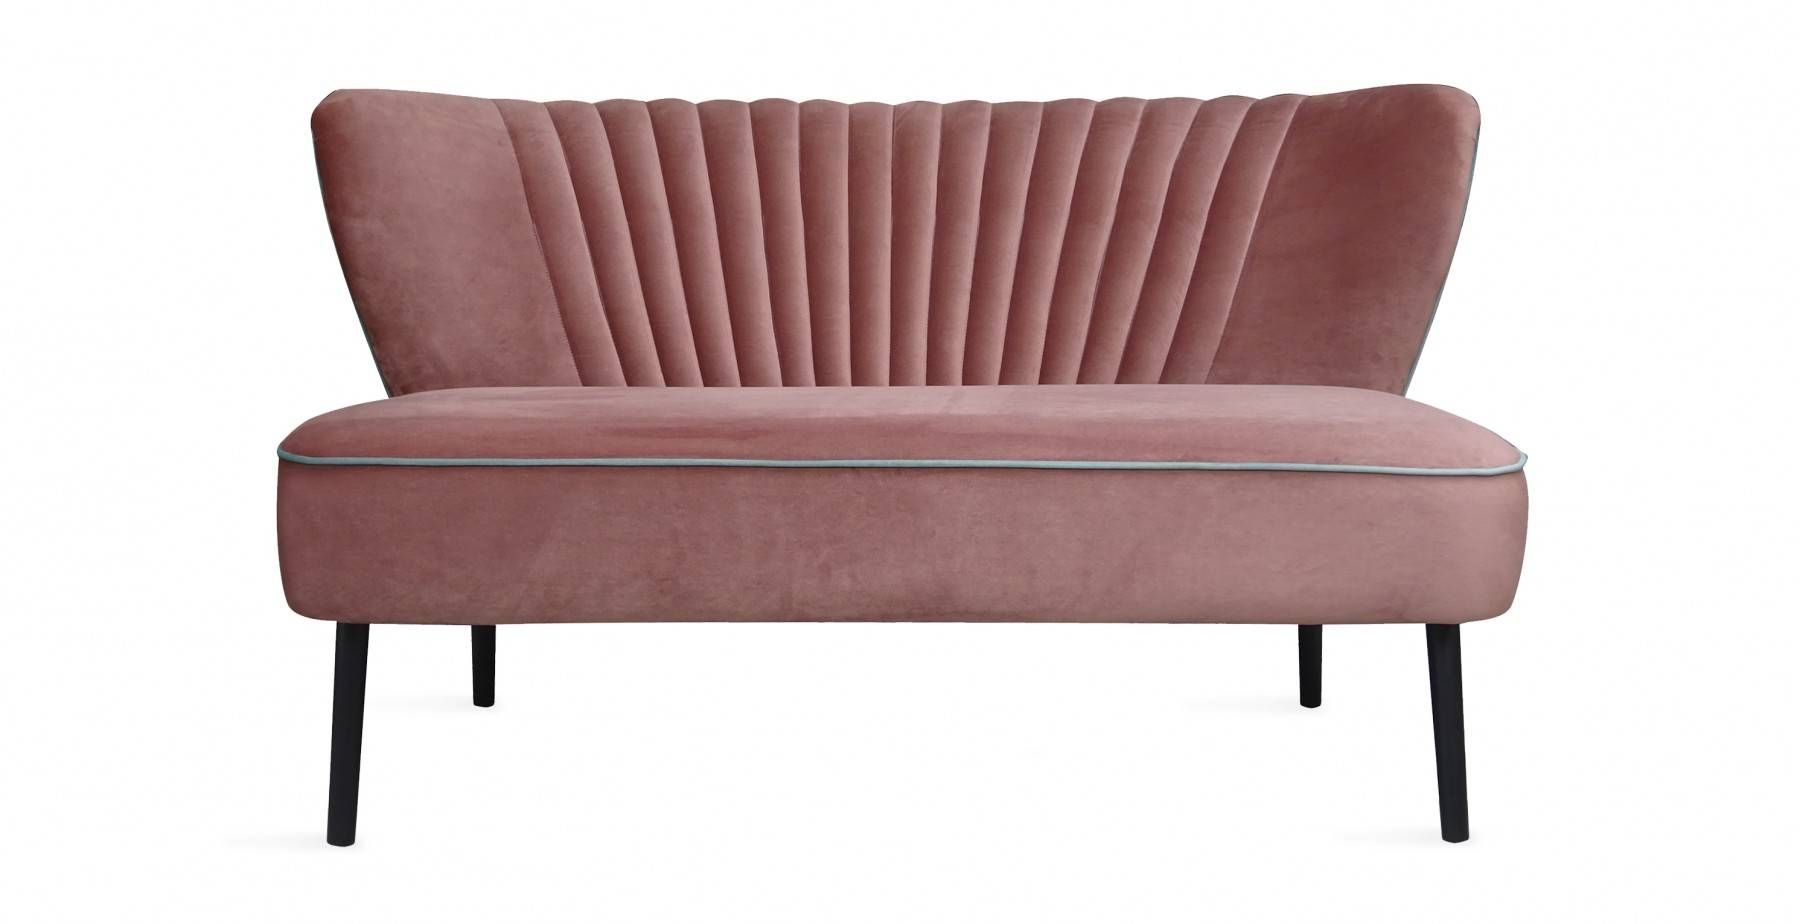 Lula 2 Seater Sofa, Blush Pink Fern & Grey Inside 2 Seater Sofas (View 20 of 30)